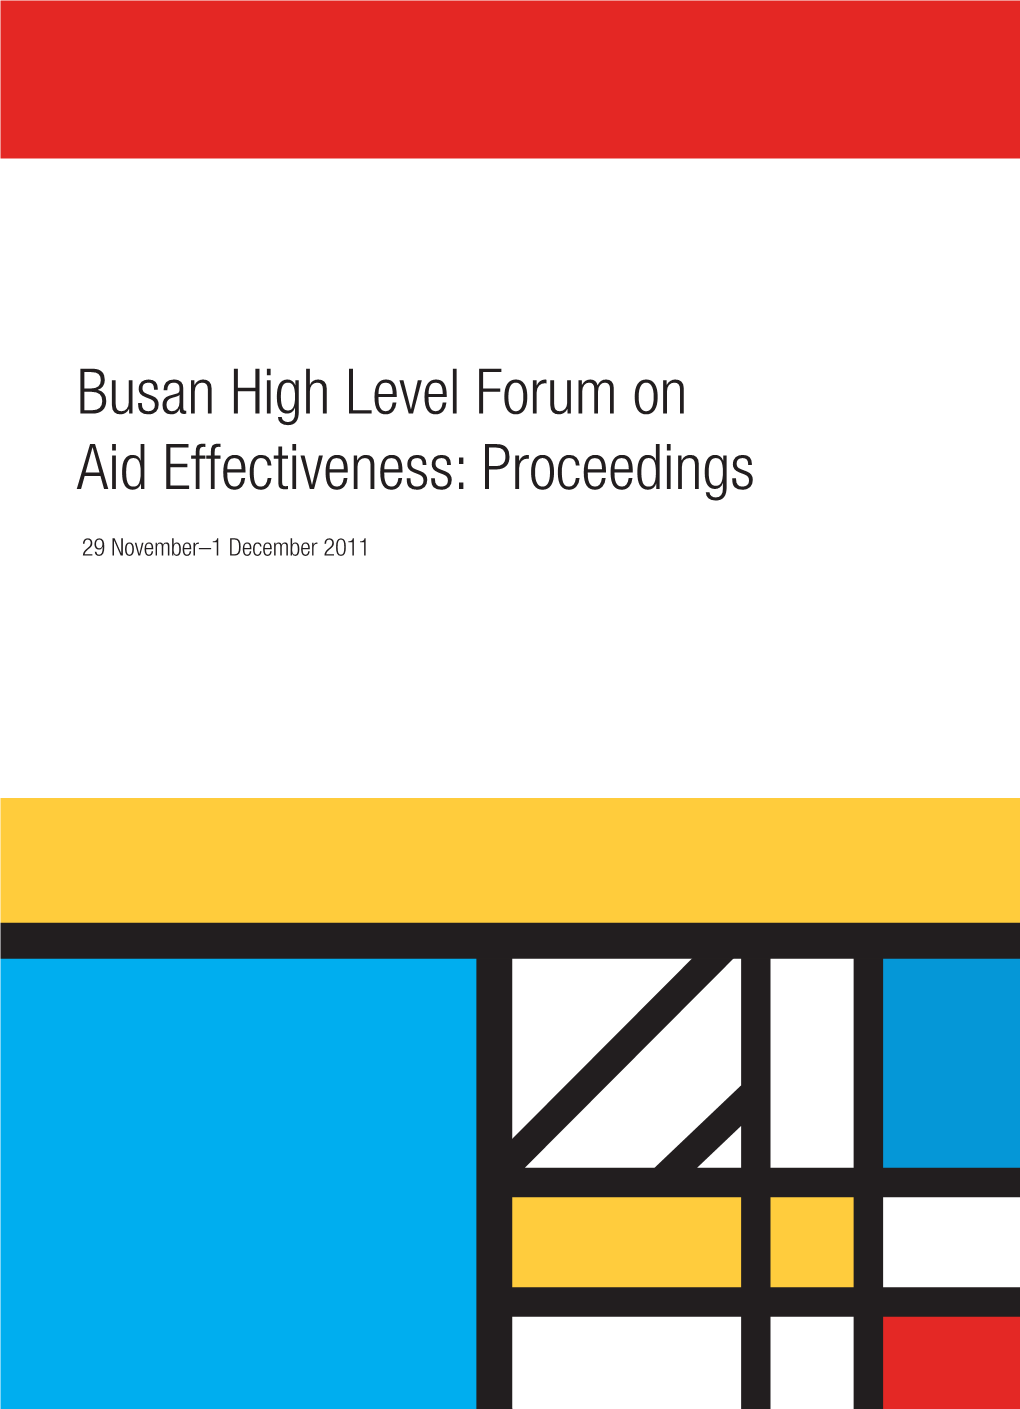 Busan High Level Forum on Aid Effectiveness: Proceedings